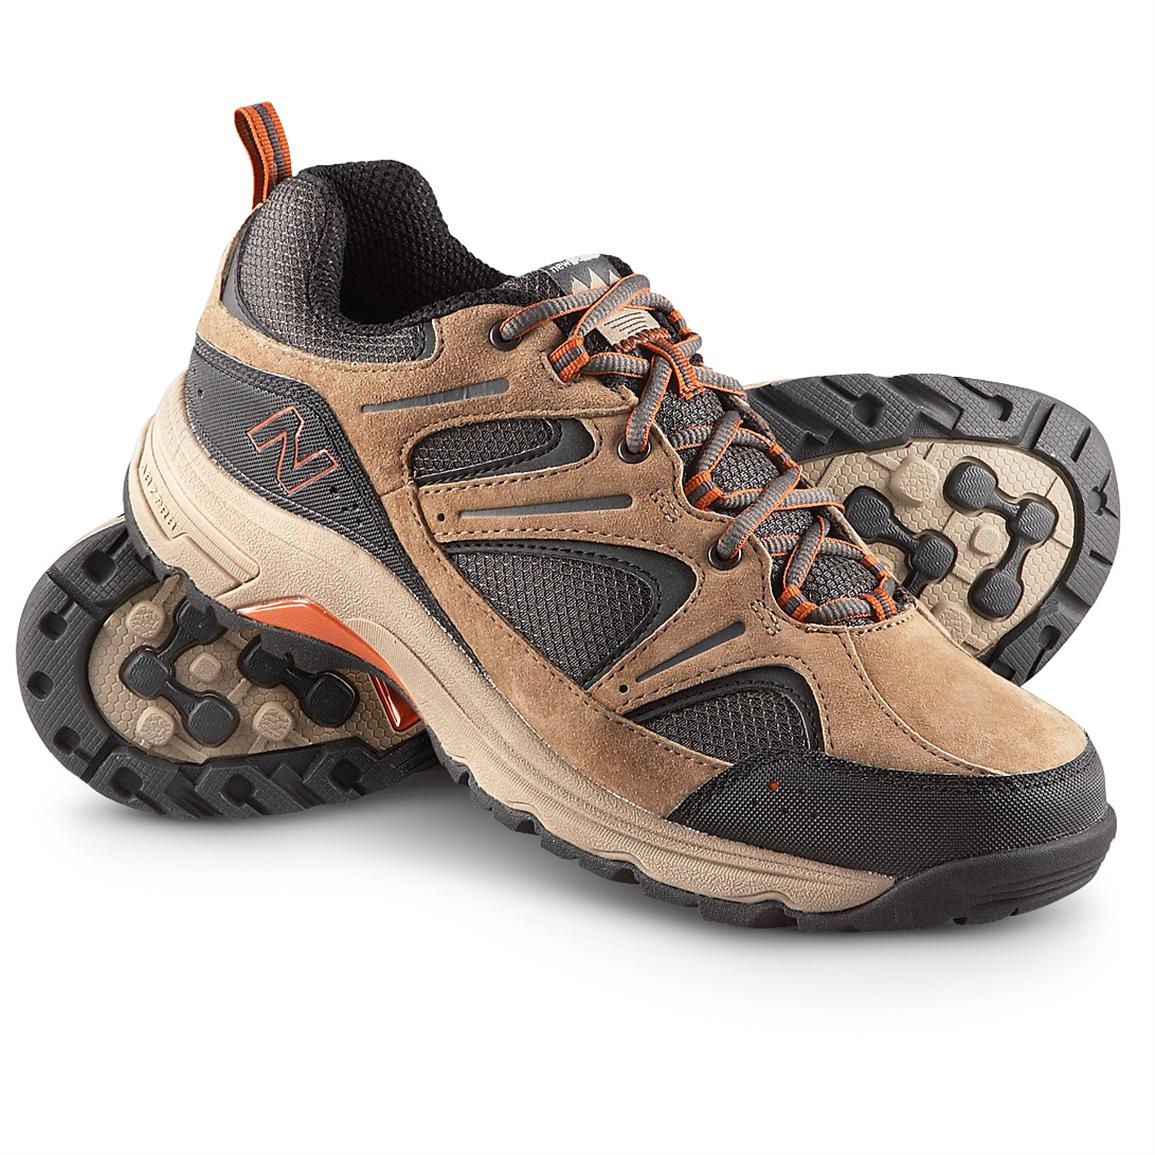 New Balance 759 Men's Walking Shoes - 228072, Running Shoes & Sneakers ...